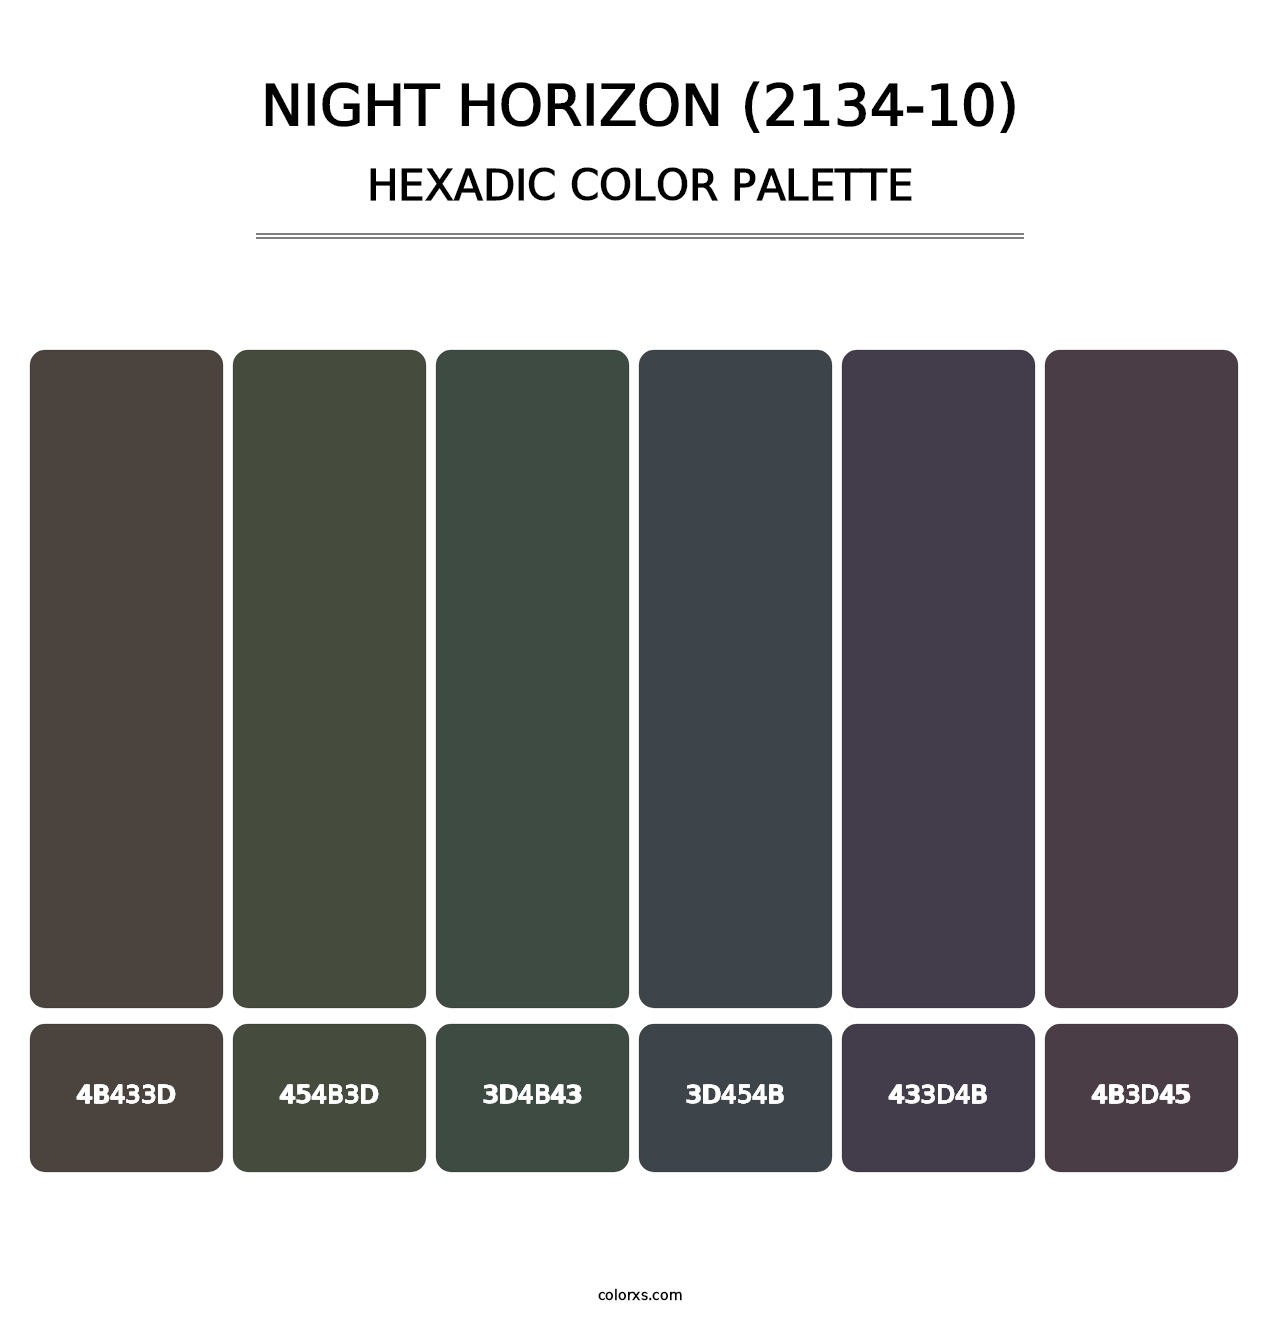 Night Horizon (2134-10) - Hexadic Color Palette